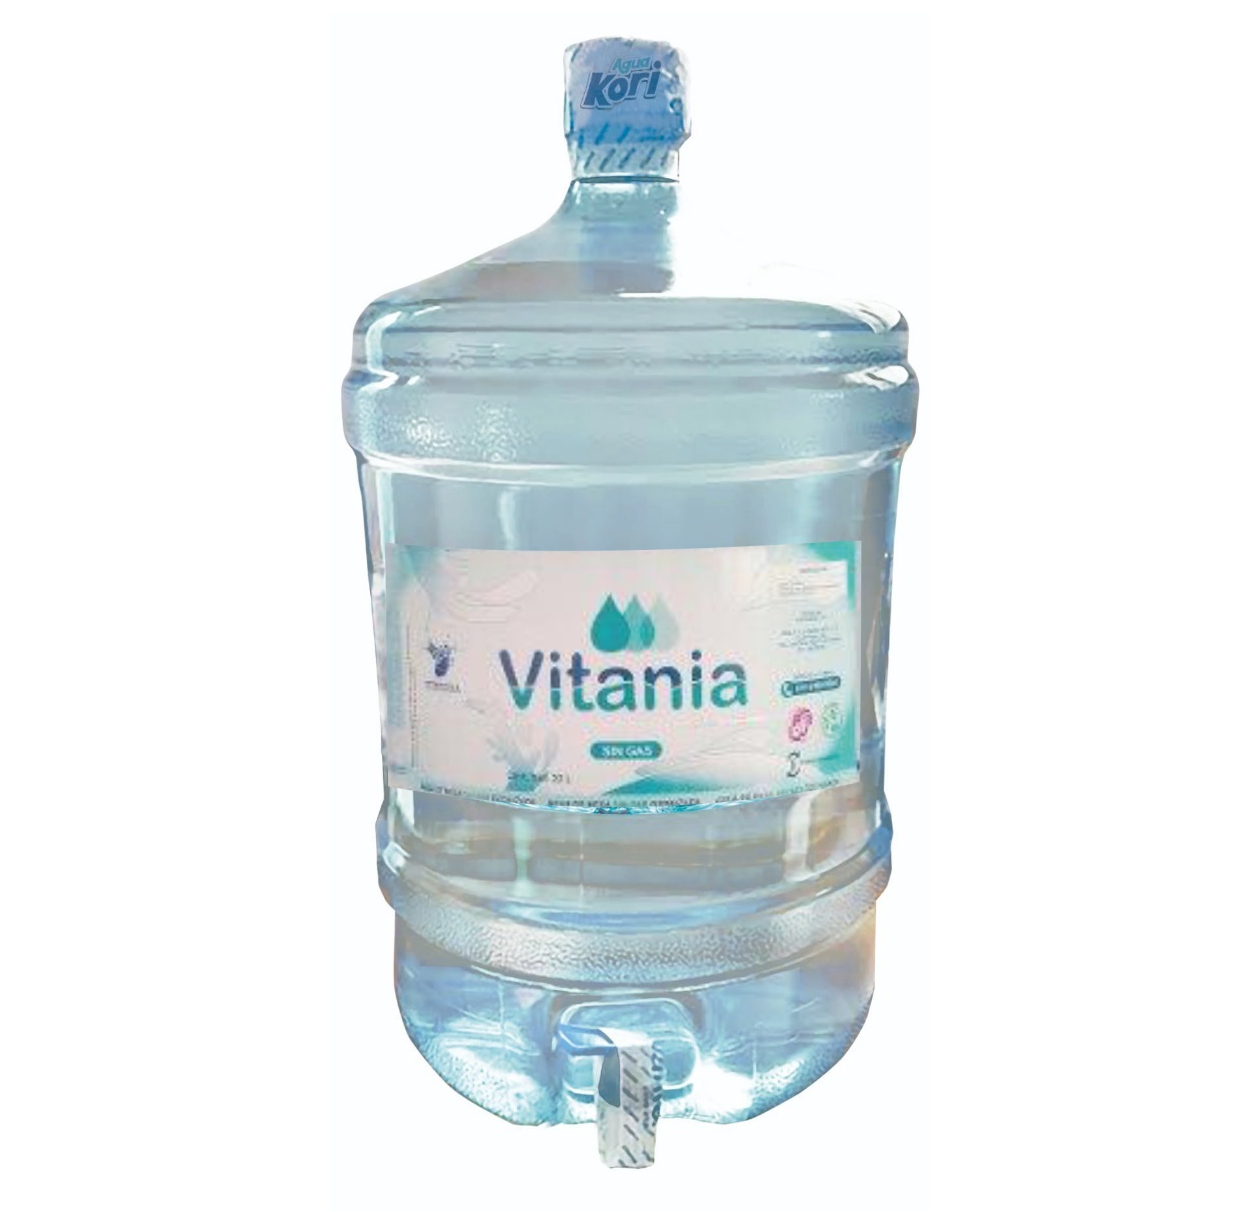 Agua Vitania 20 litros Envase mas liquido Bidon con – DISTRIBUIDORA FERNANDES